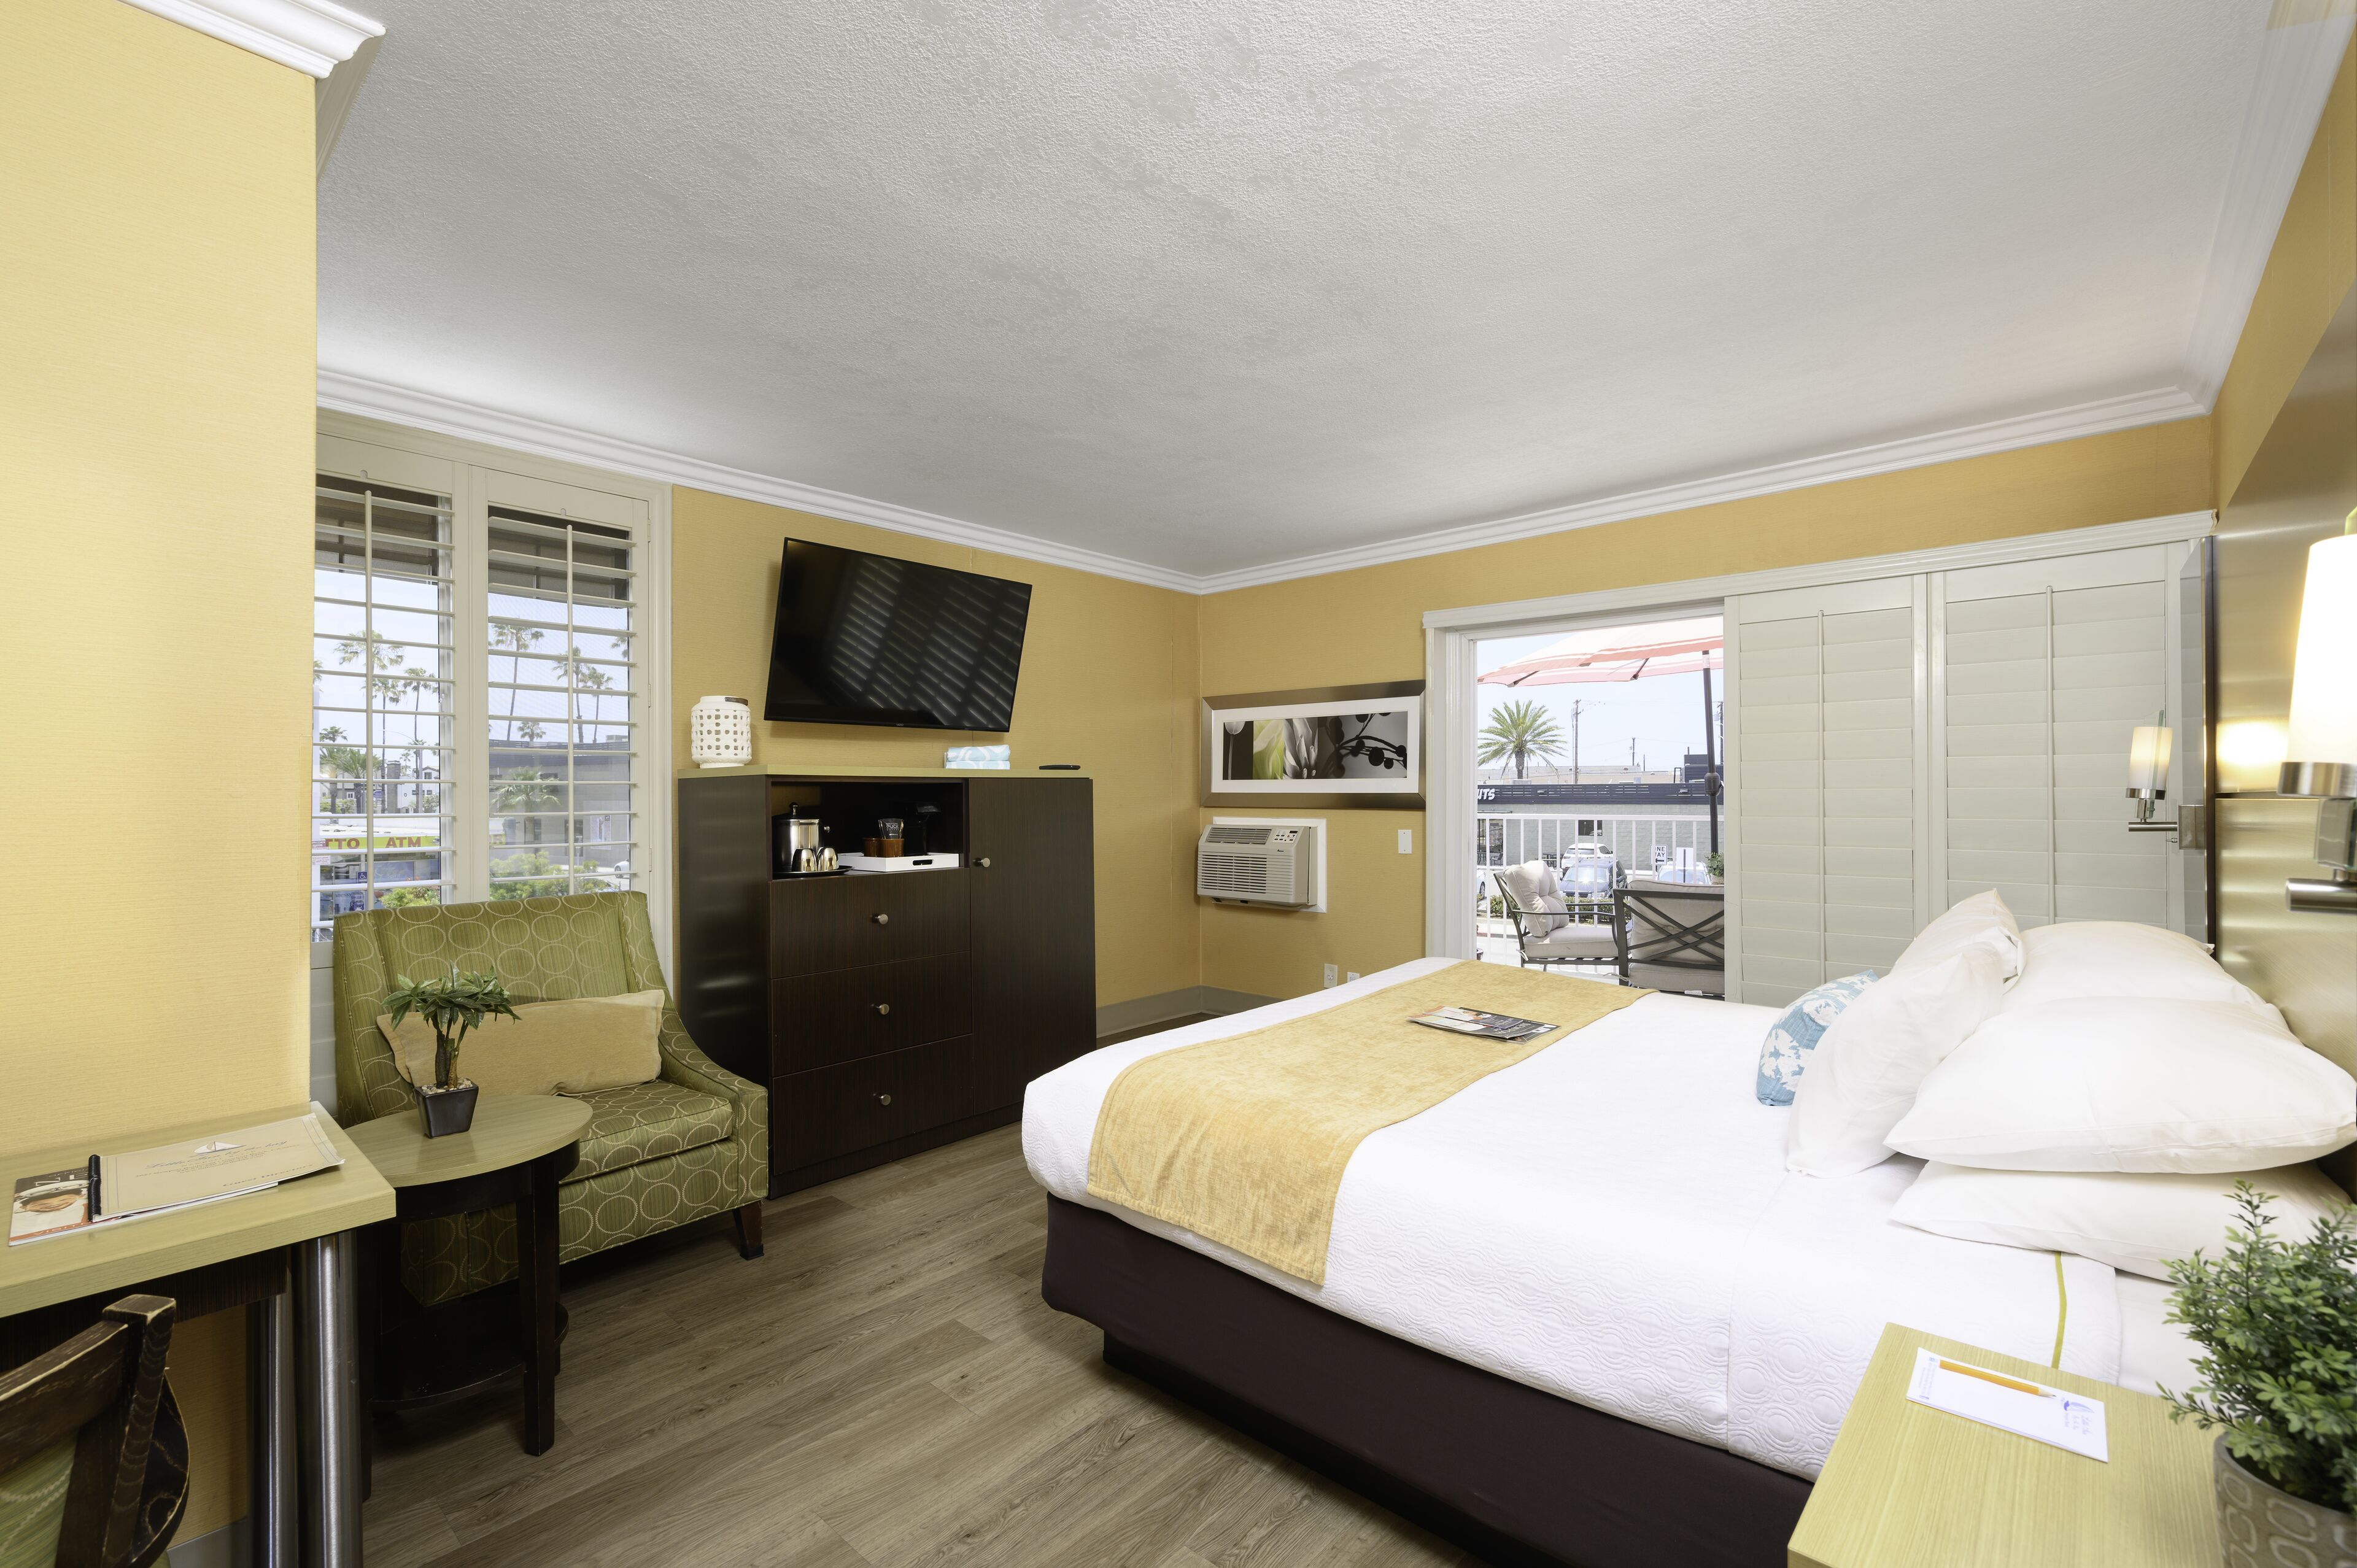 Little Inn by The Bay Newport Beach Hotel